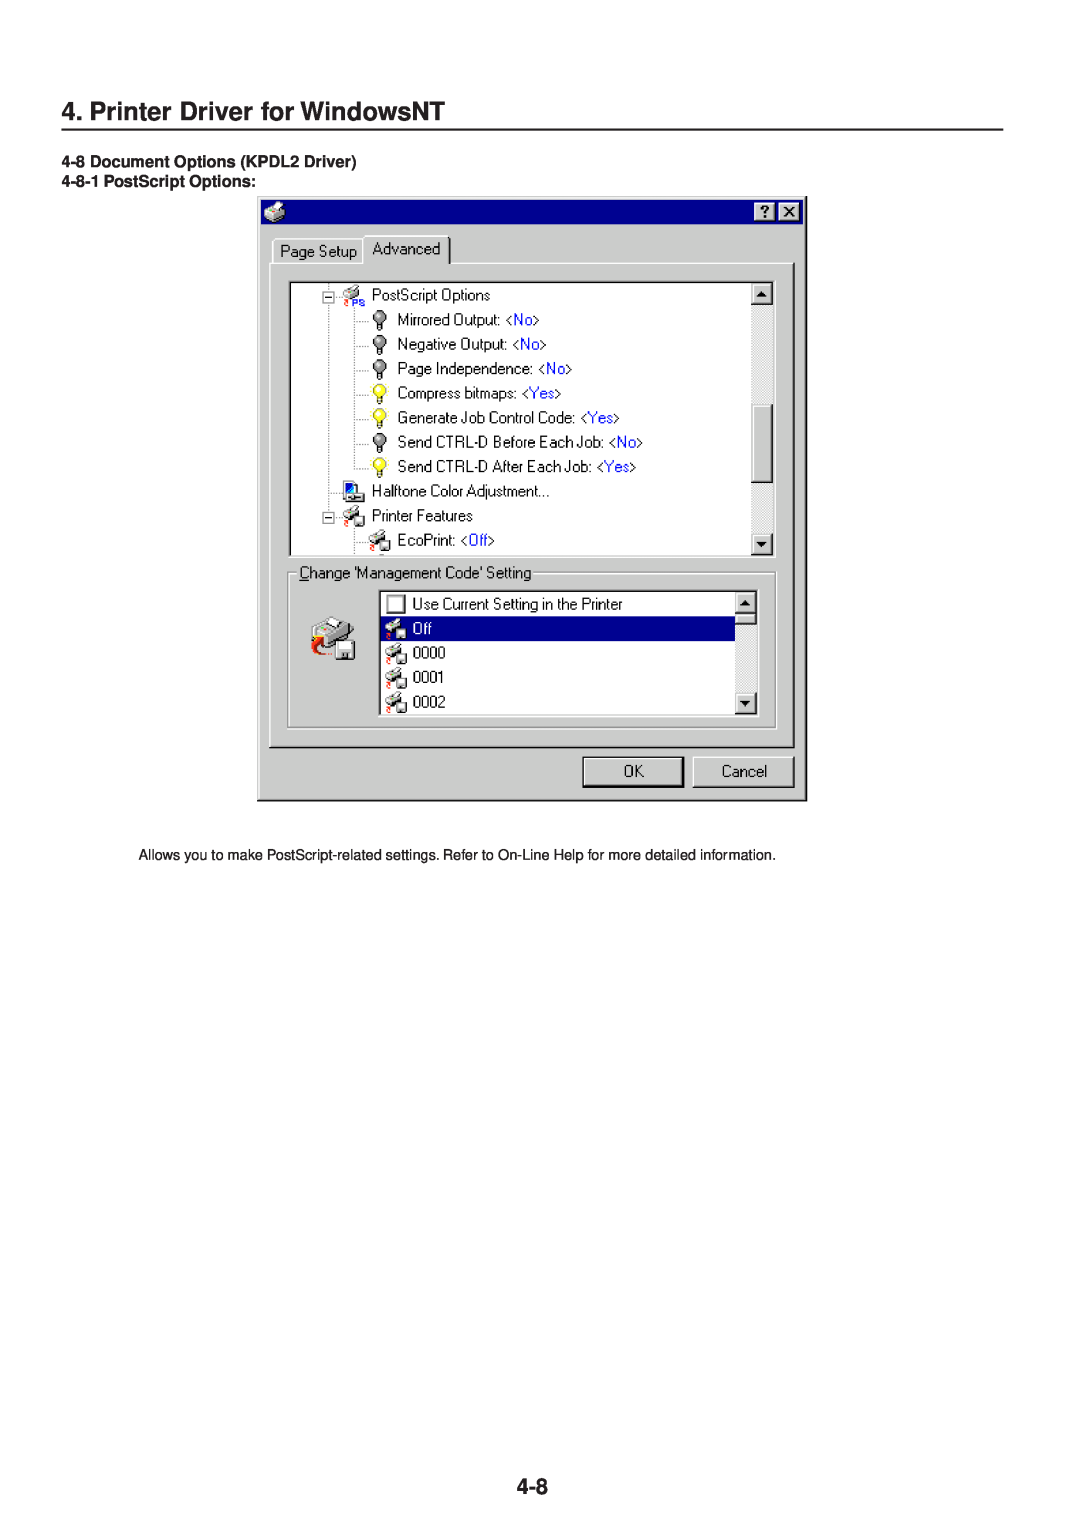 IBM Printing System manual Printer Driver for WindowsNT, Document Options KPDL2 Driver 4-8-1 PostScript Options 